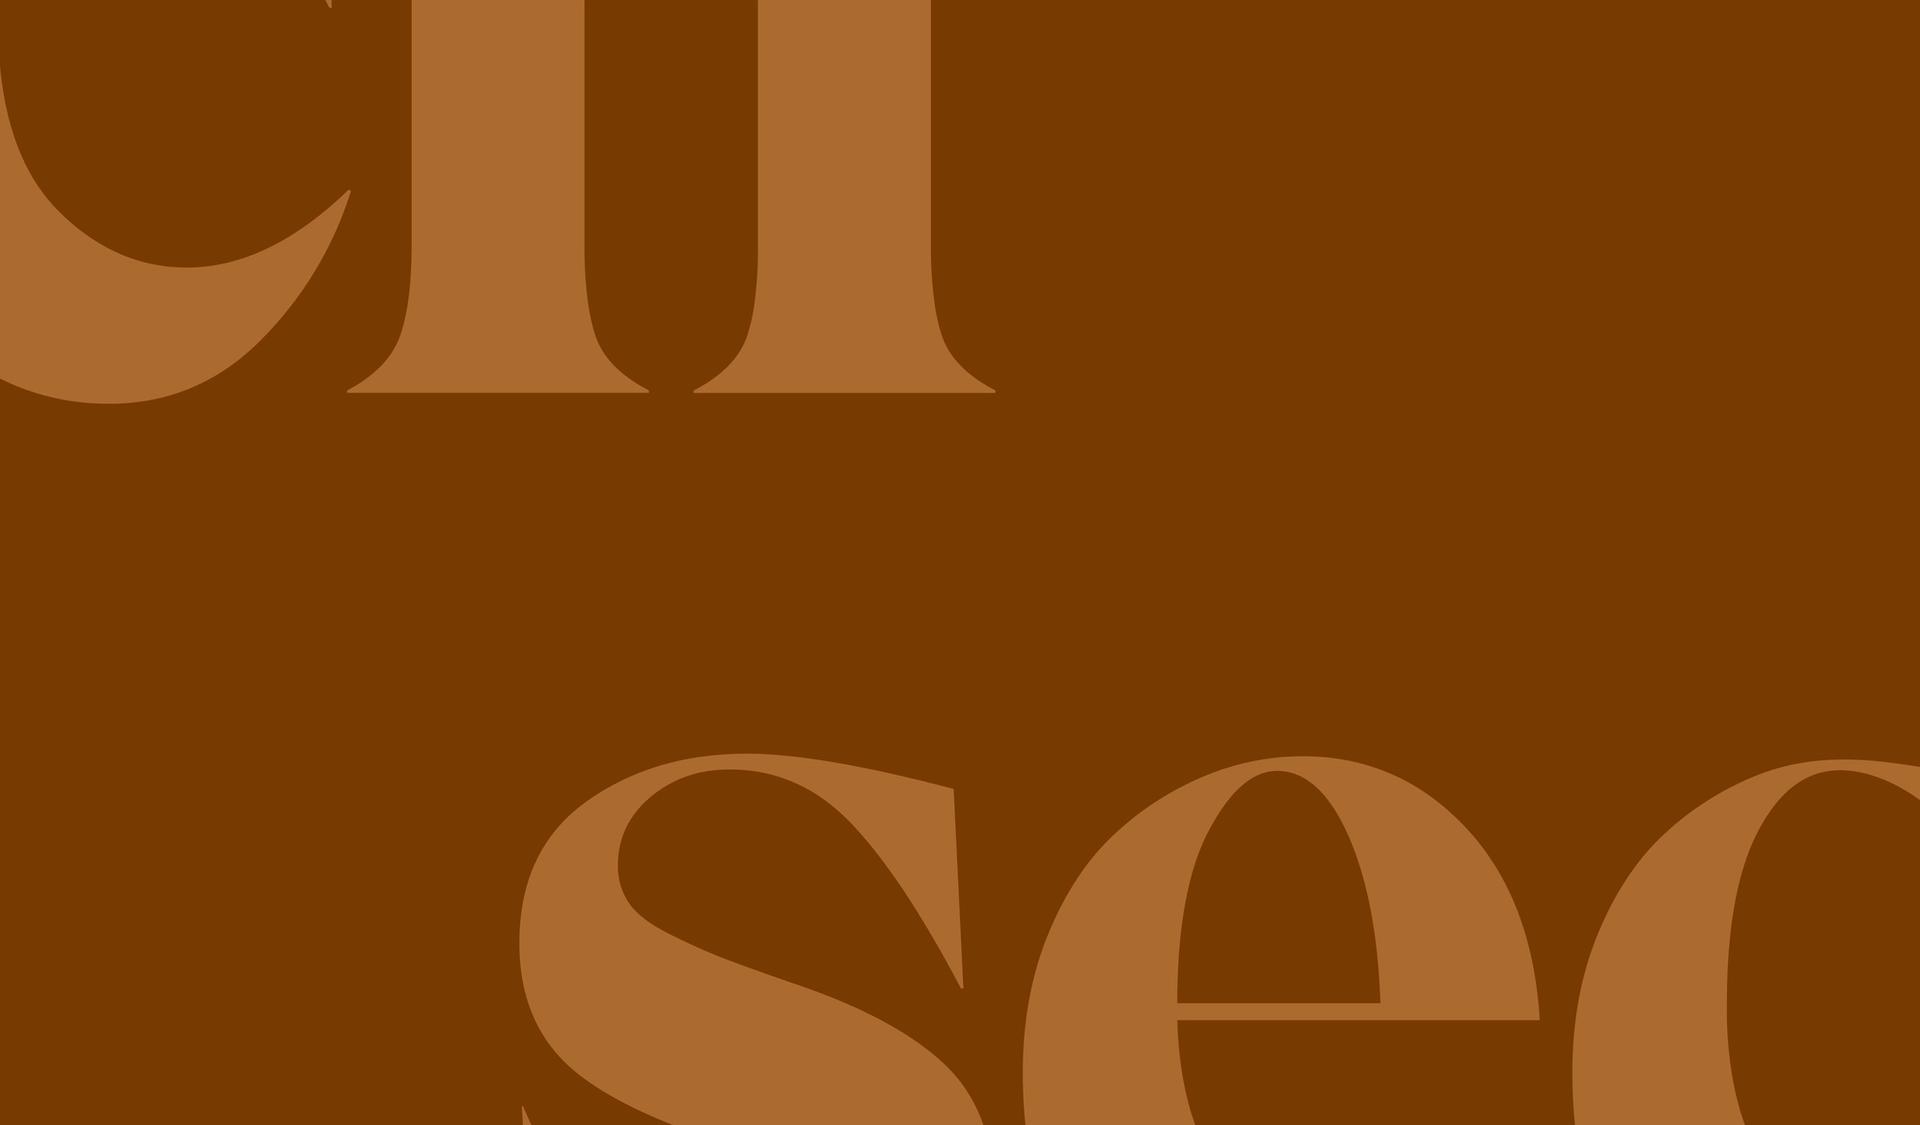 Secfi abstract logo graphic